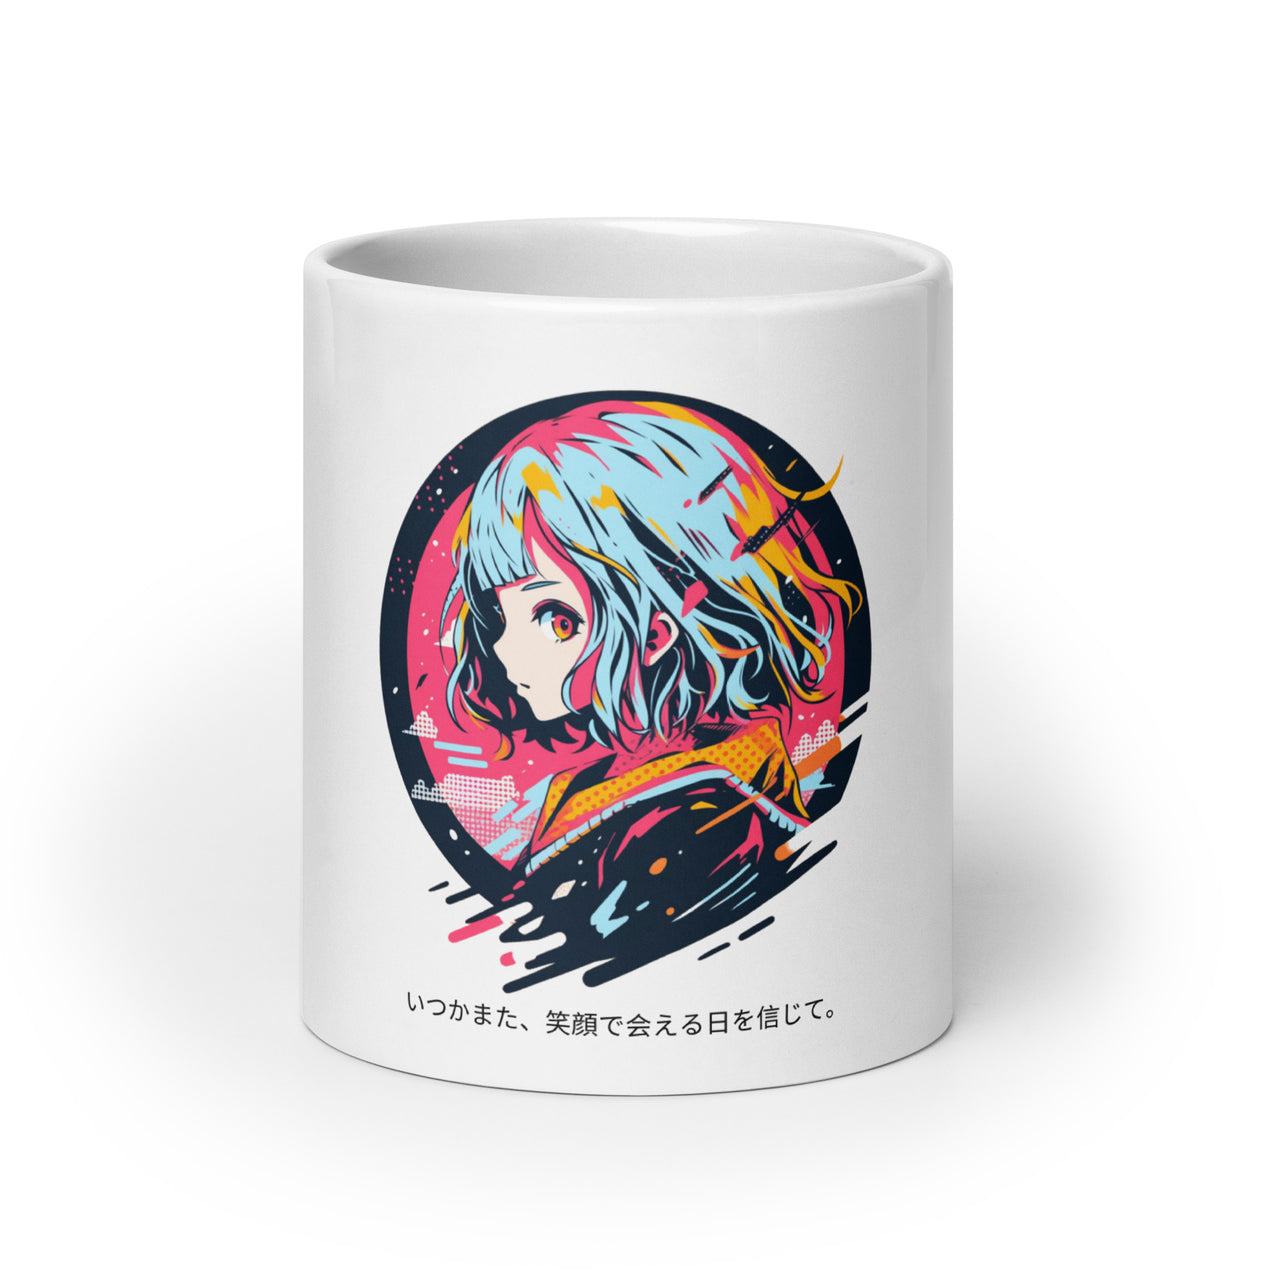 Colorful Anime Girl with Hopeful Message White Mug